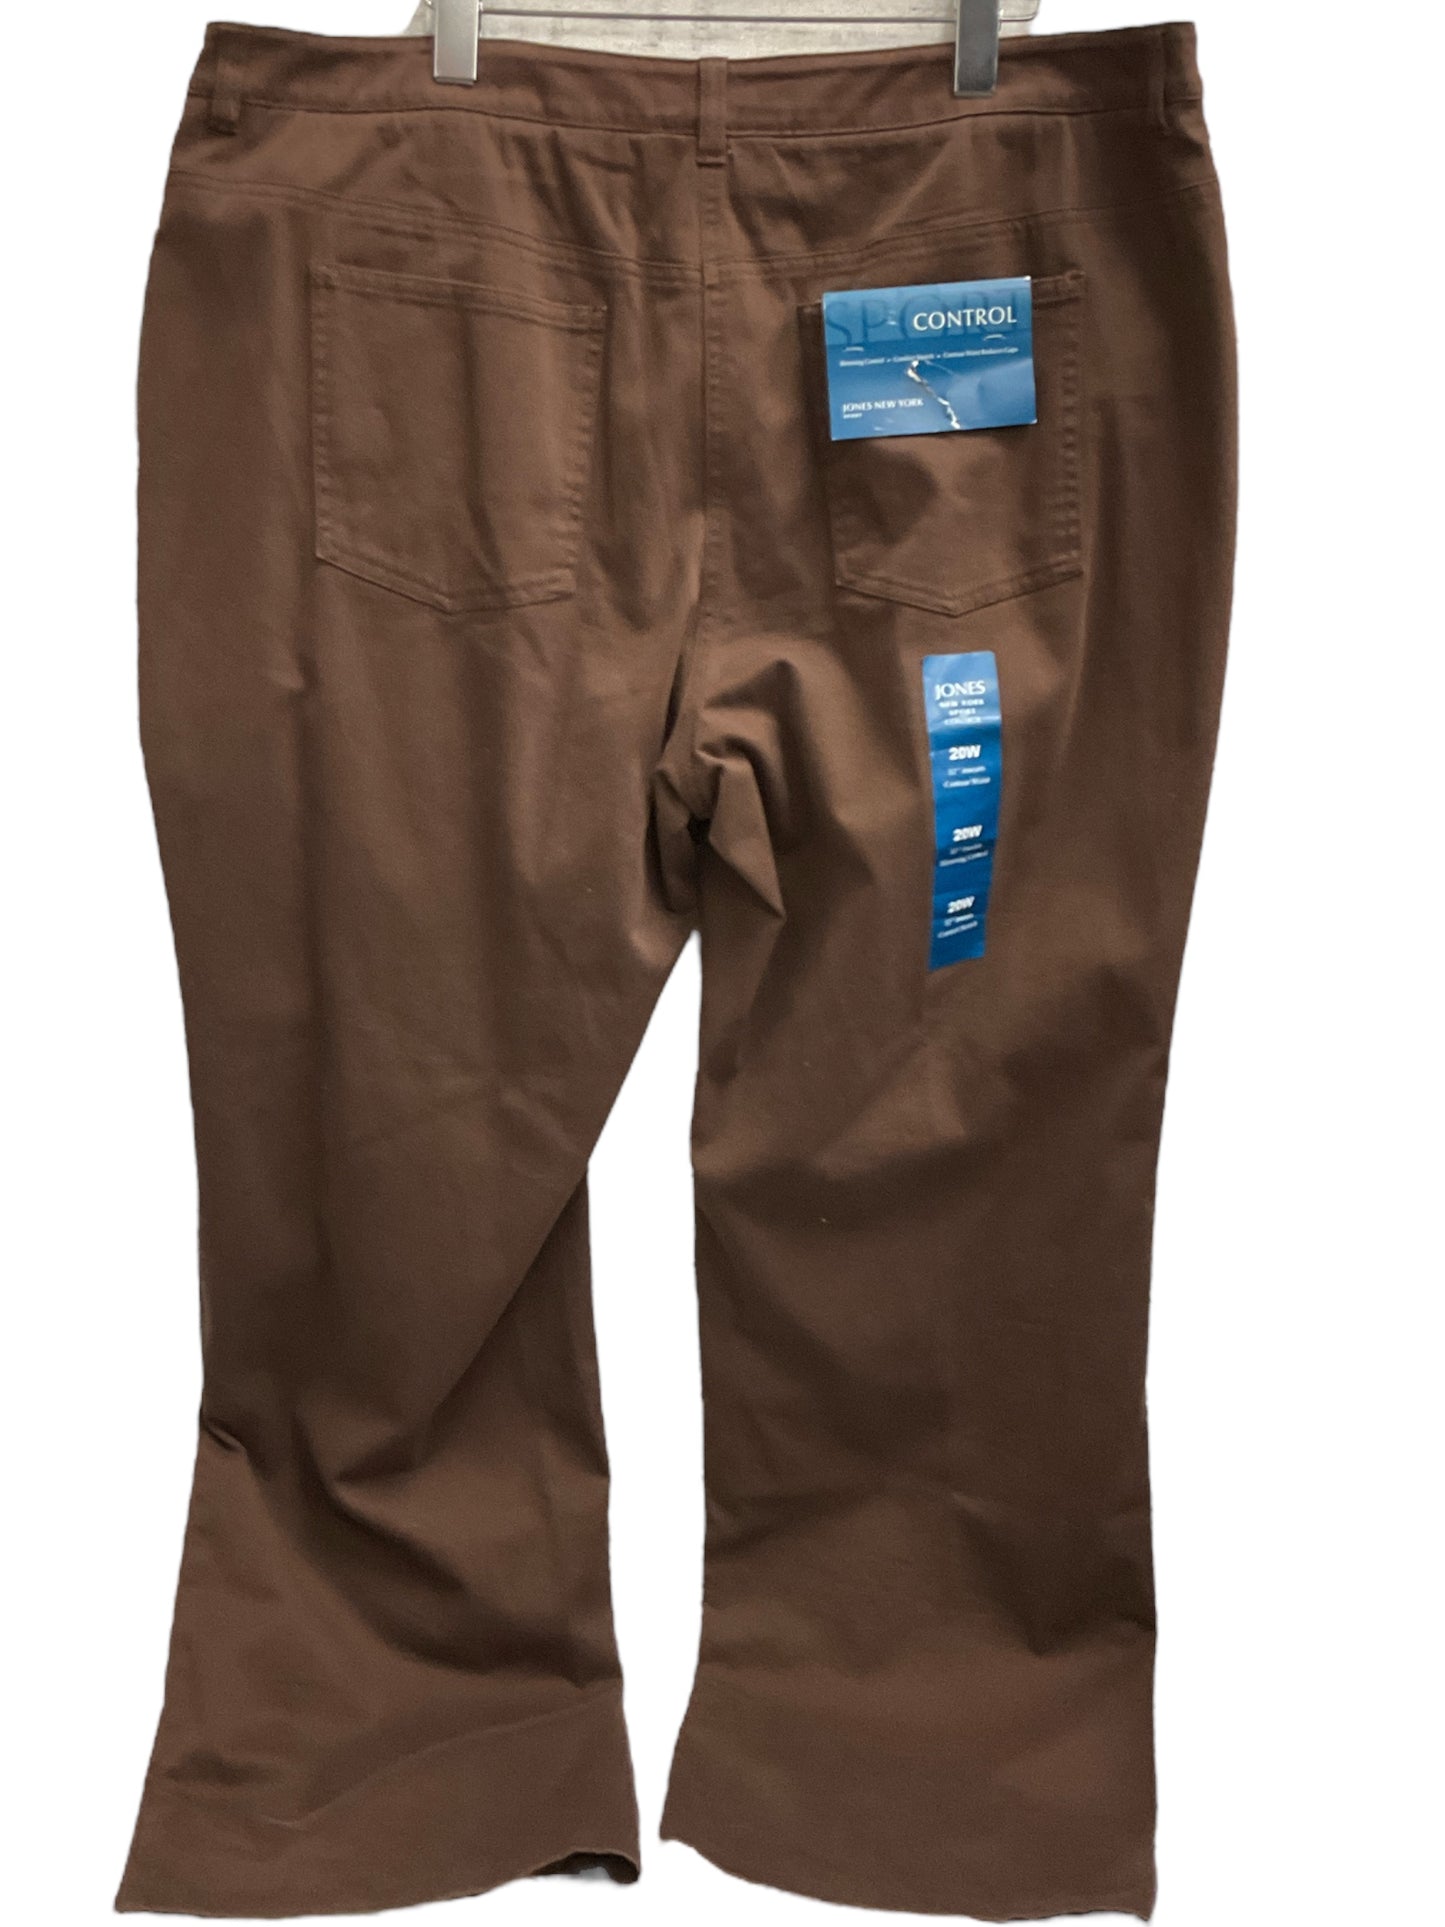 Pants Work/dress By Jones New York  Size: 20